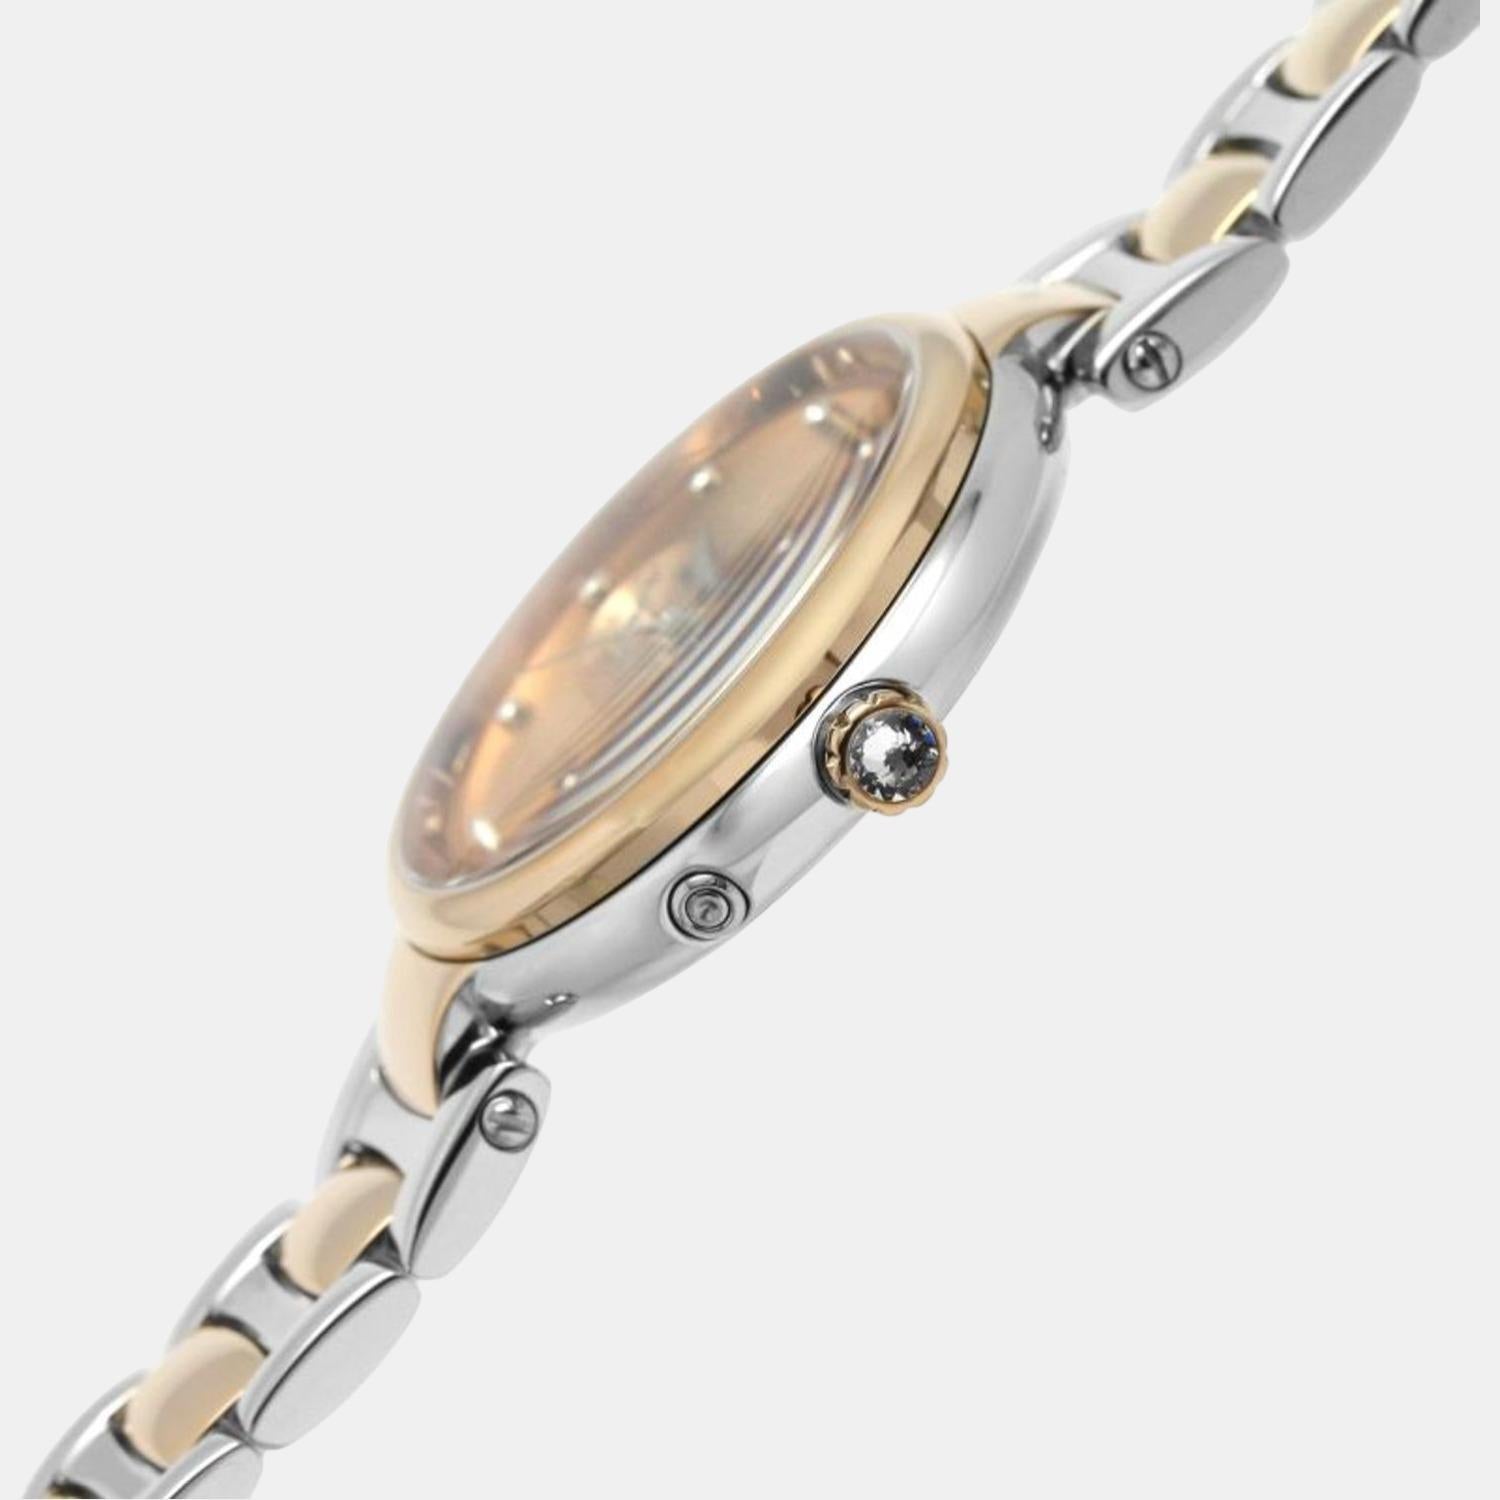 roamer-stainless-steel-gold-analog-female-watch-858801-49-38-50